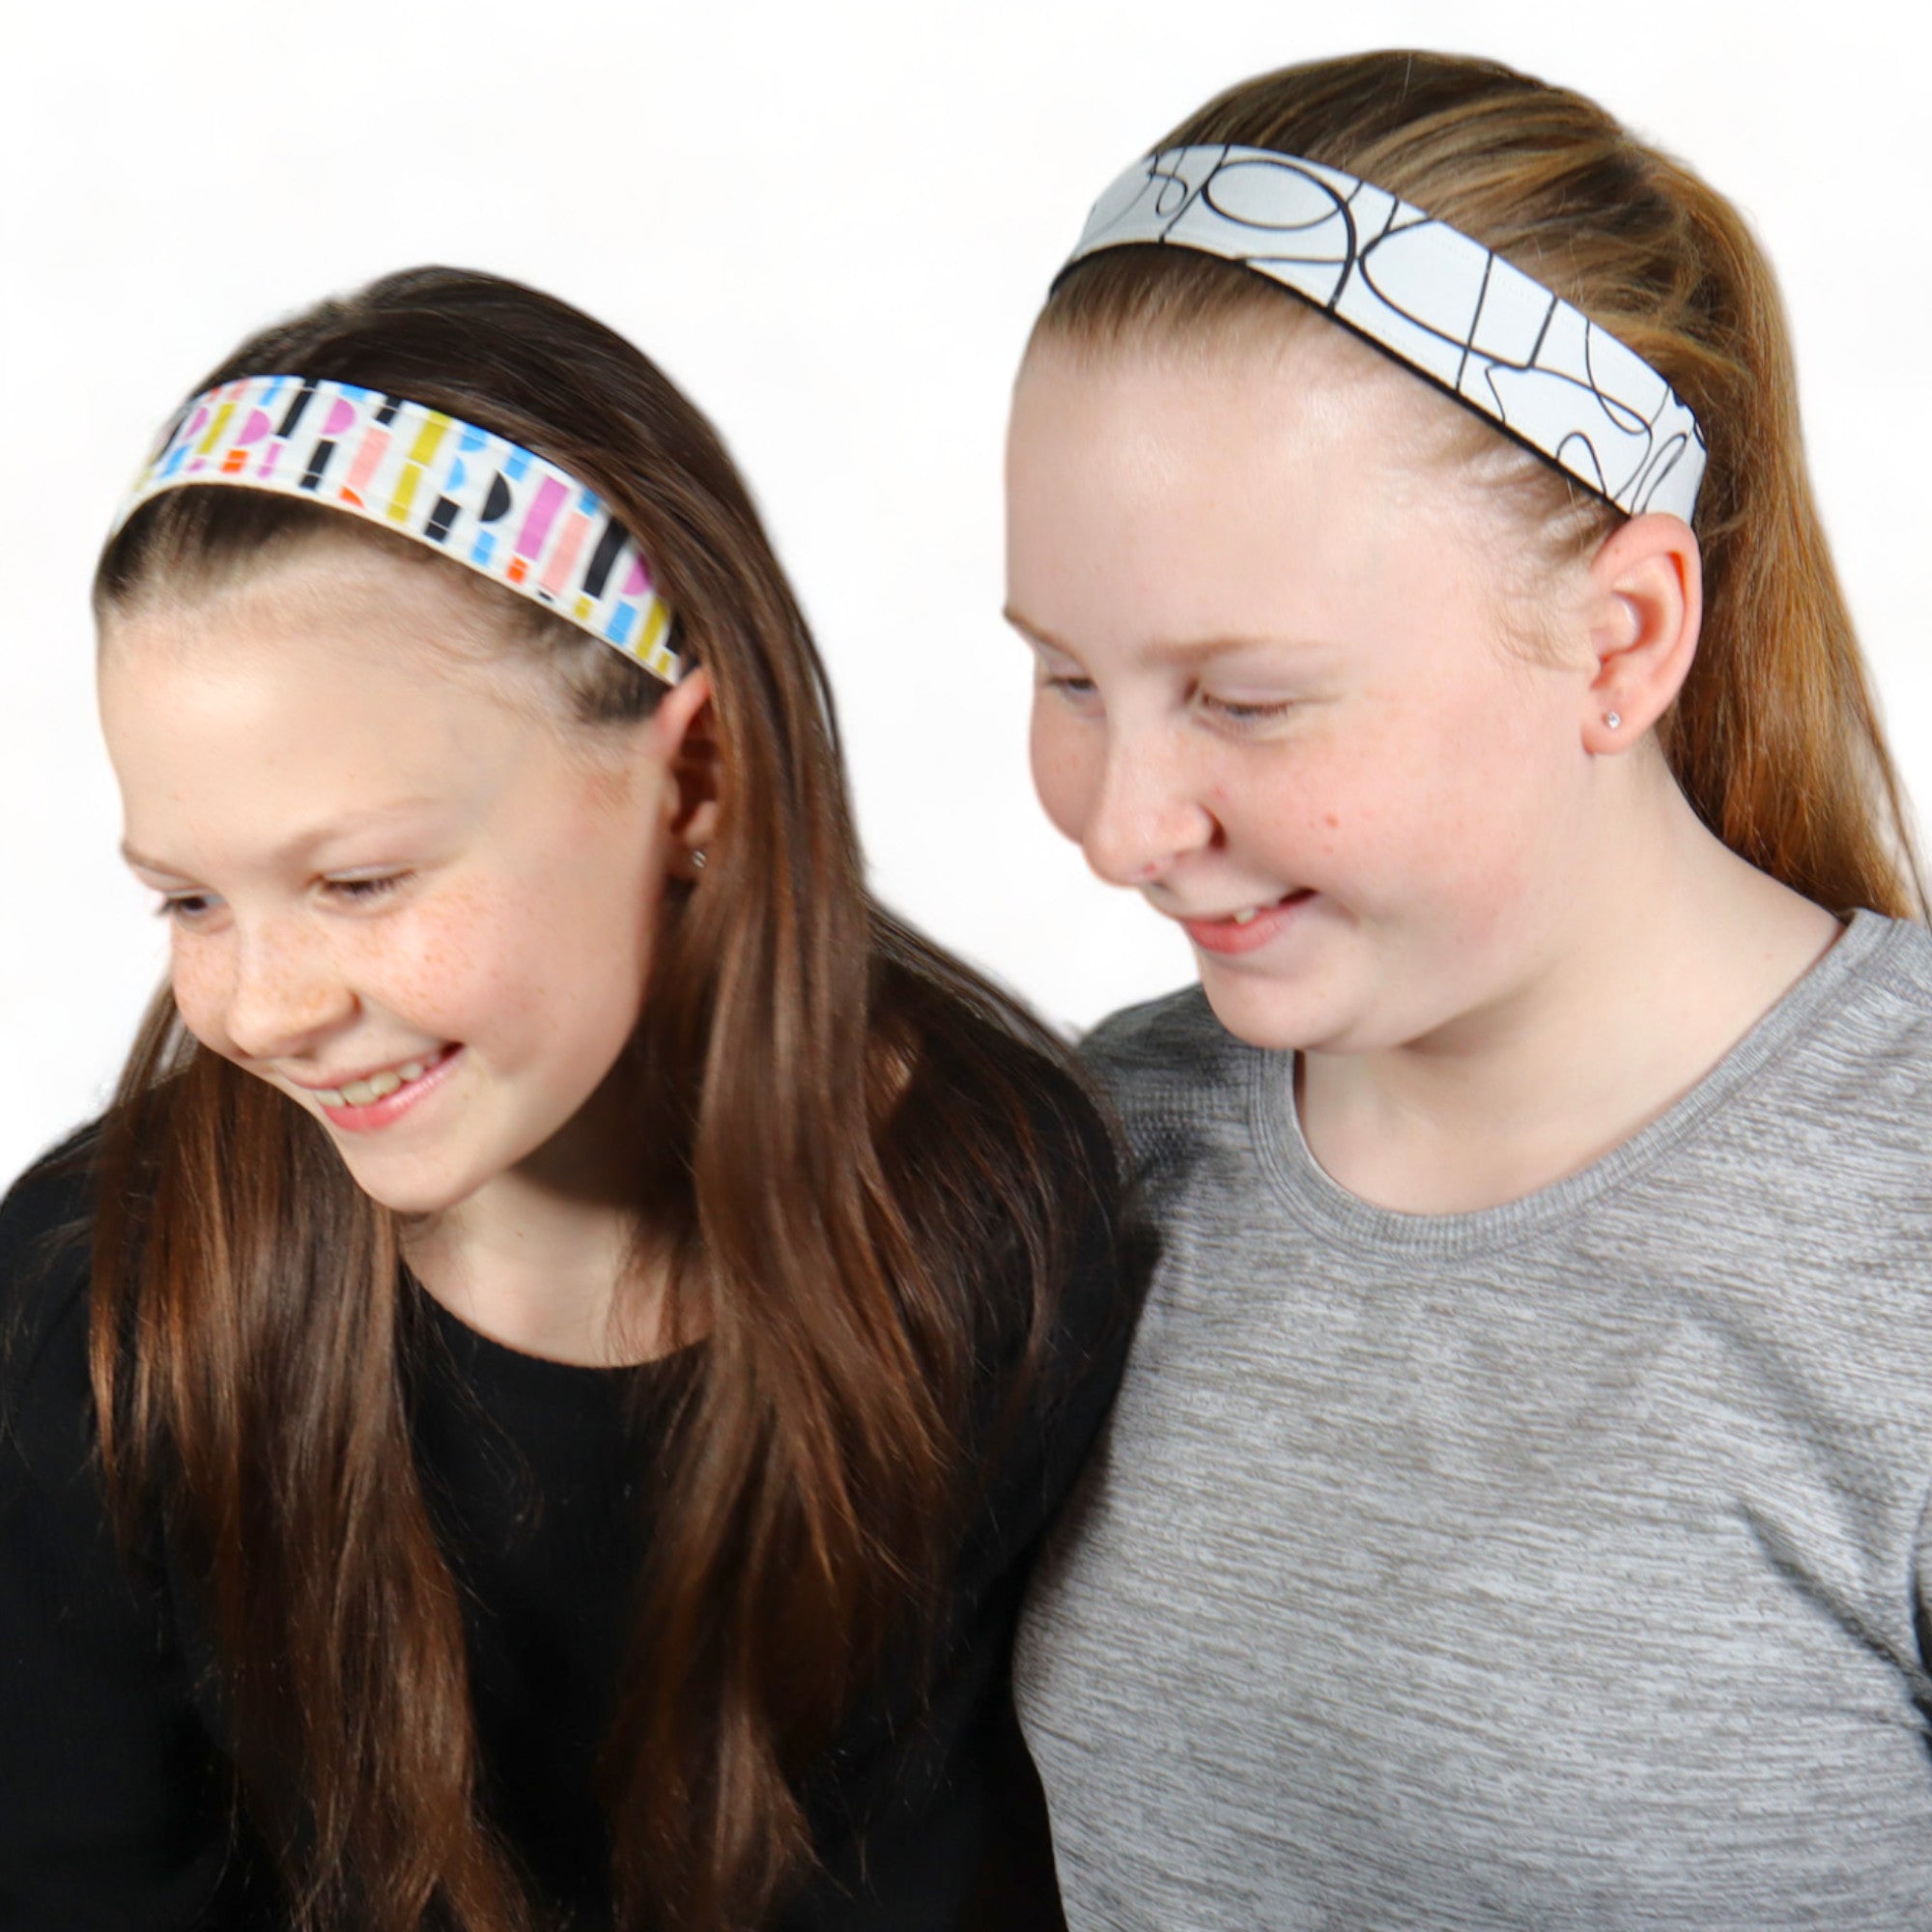 Headband Sewing KIt - Abstract Black - Makes 4 Headbands